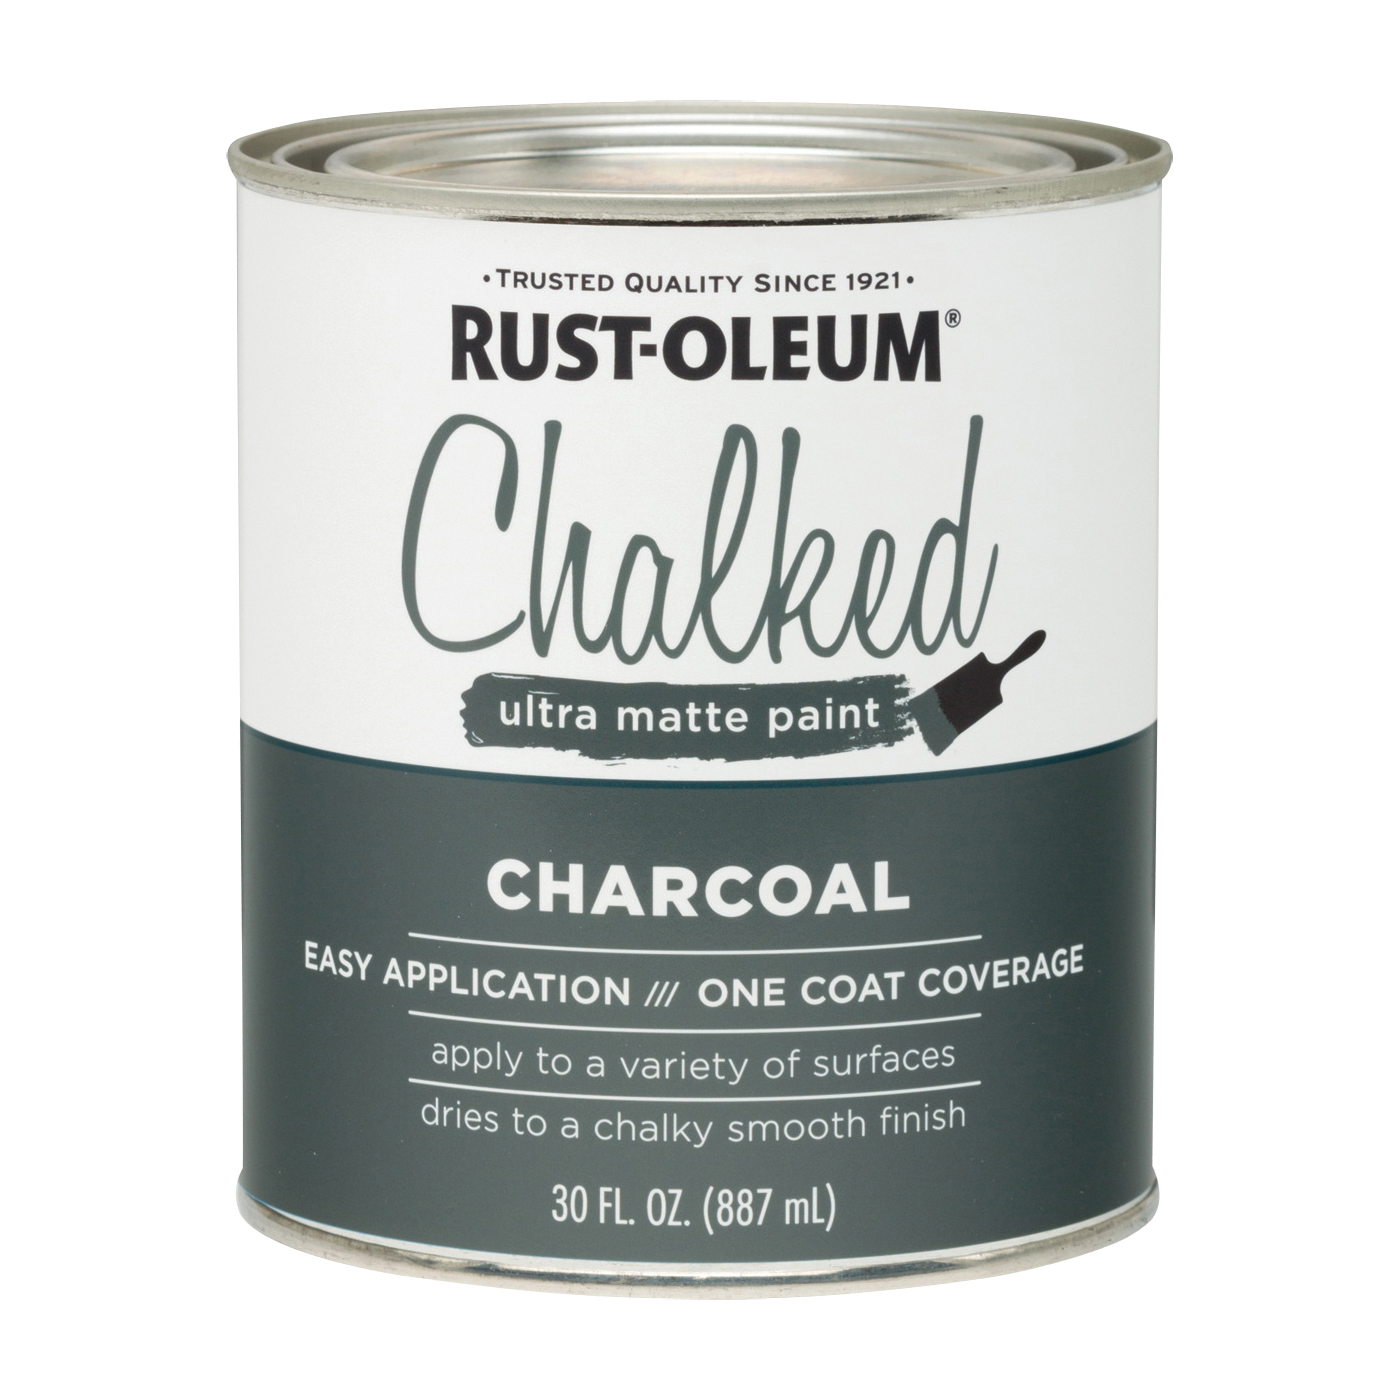 RUST-OLEUM 285144 Chalk Paint, Ultra Matte, Charcoal, 30 oz - 1